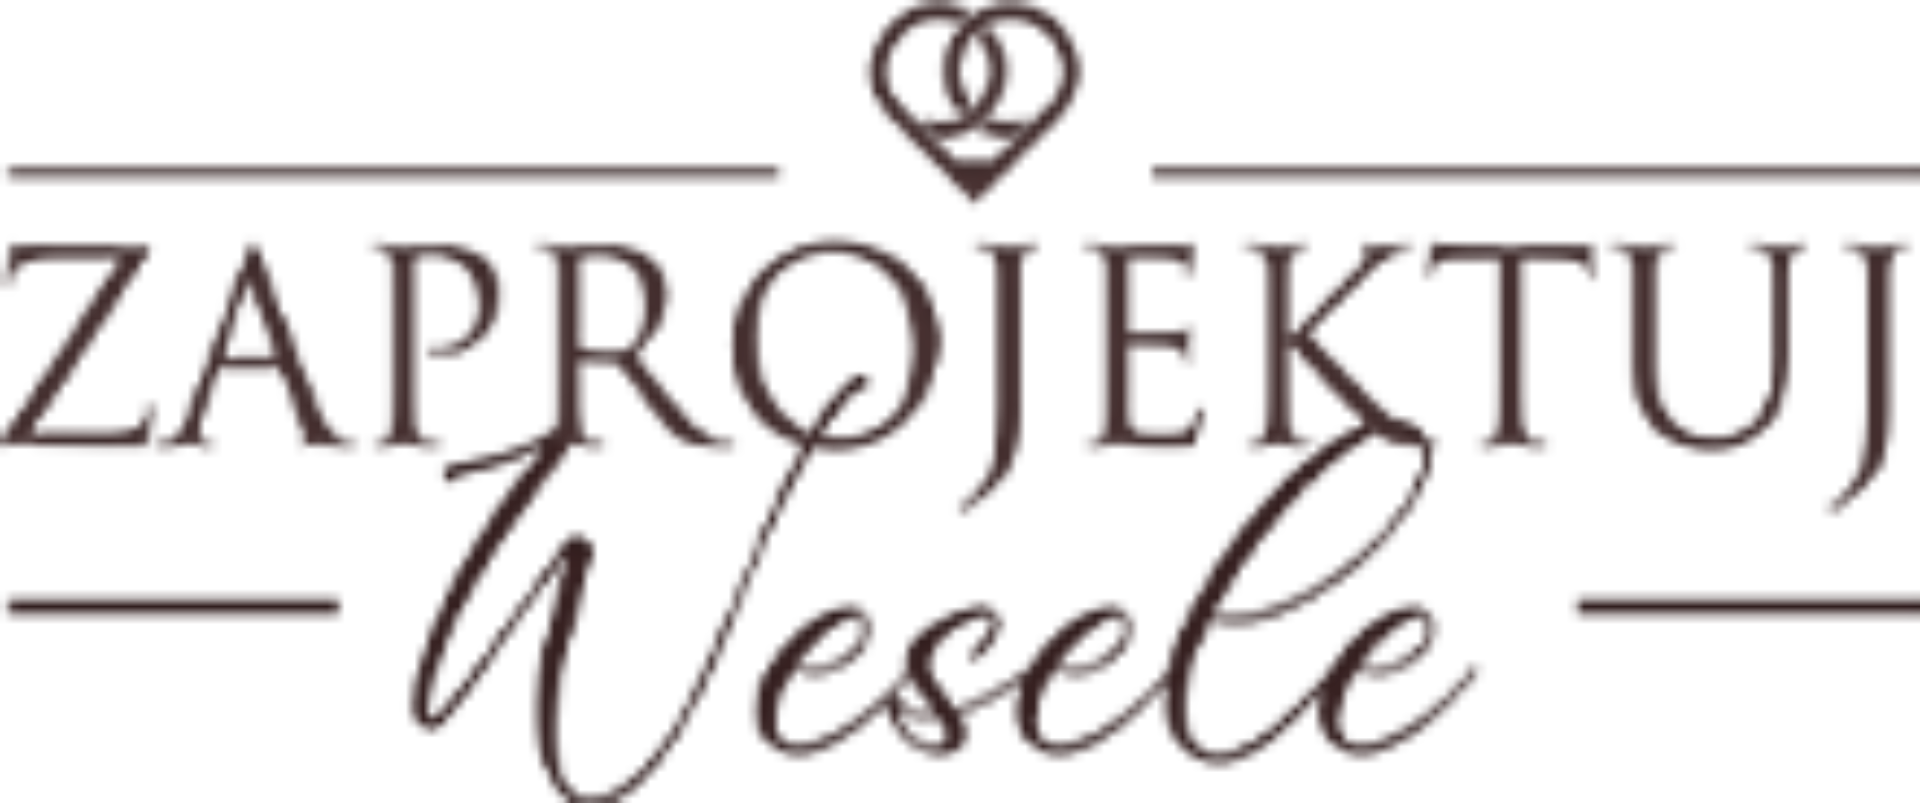 Blog ZaprojektujWesele.pl - Portal ślubny Logo strony marki